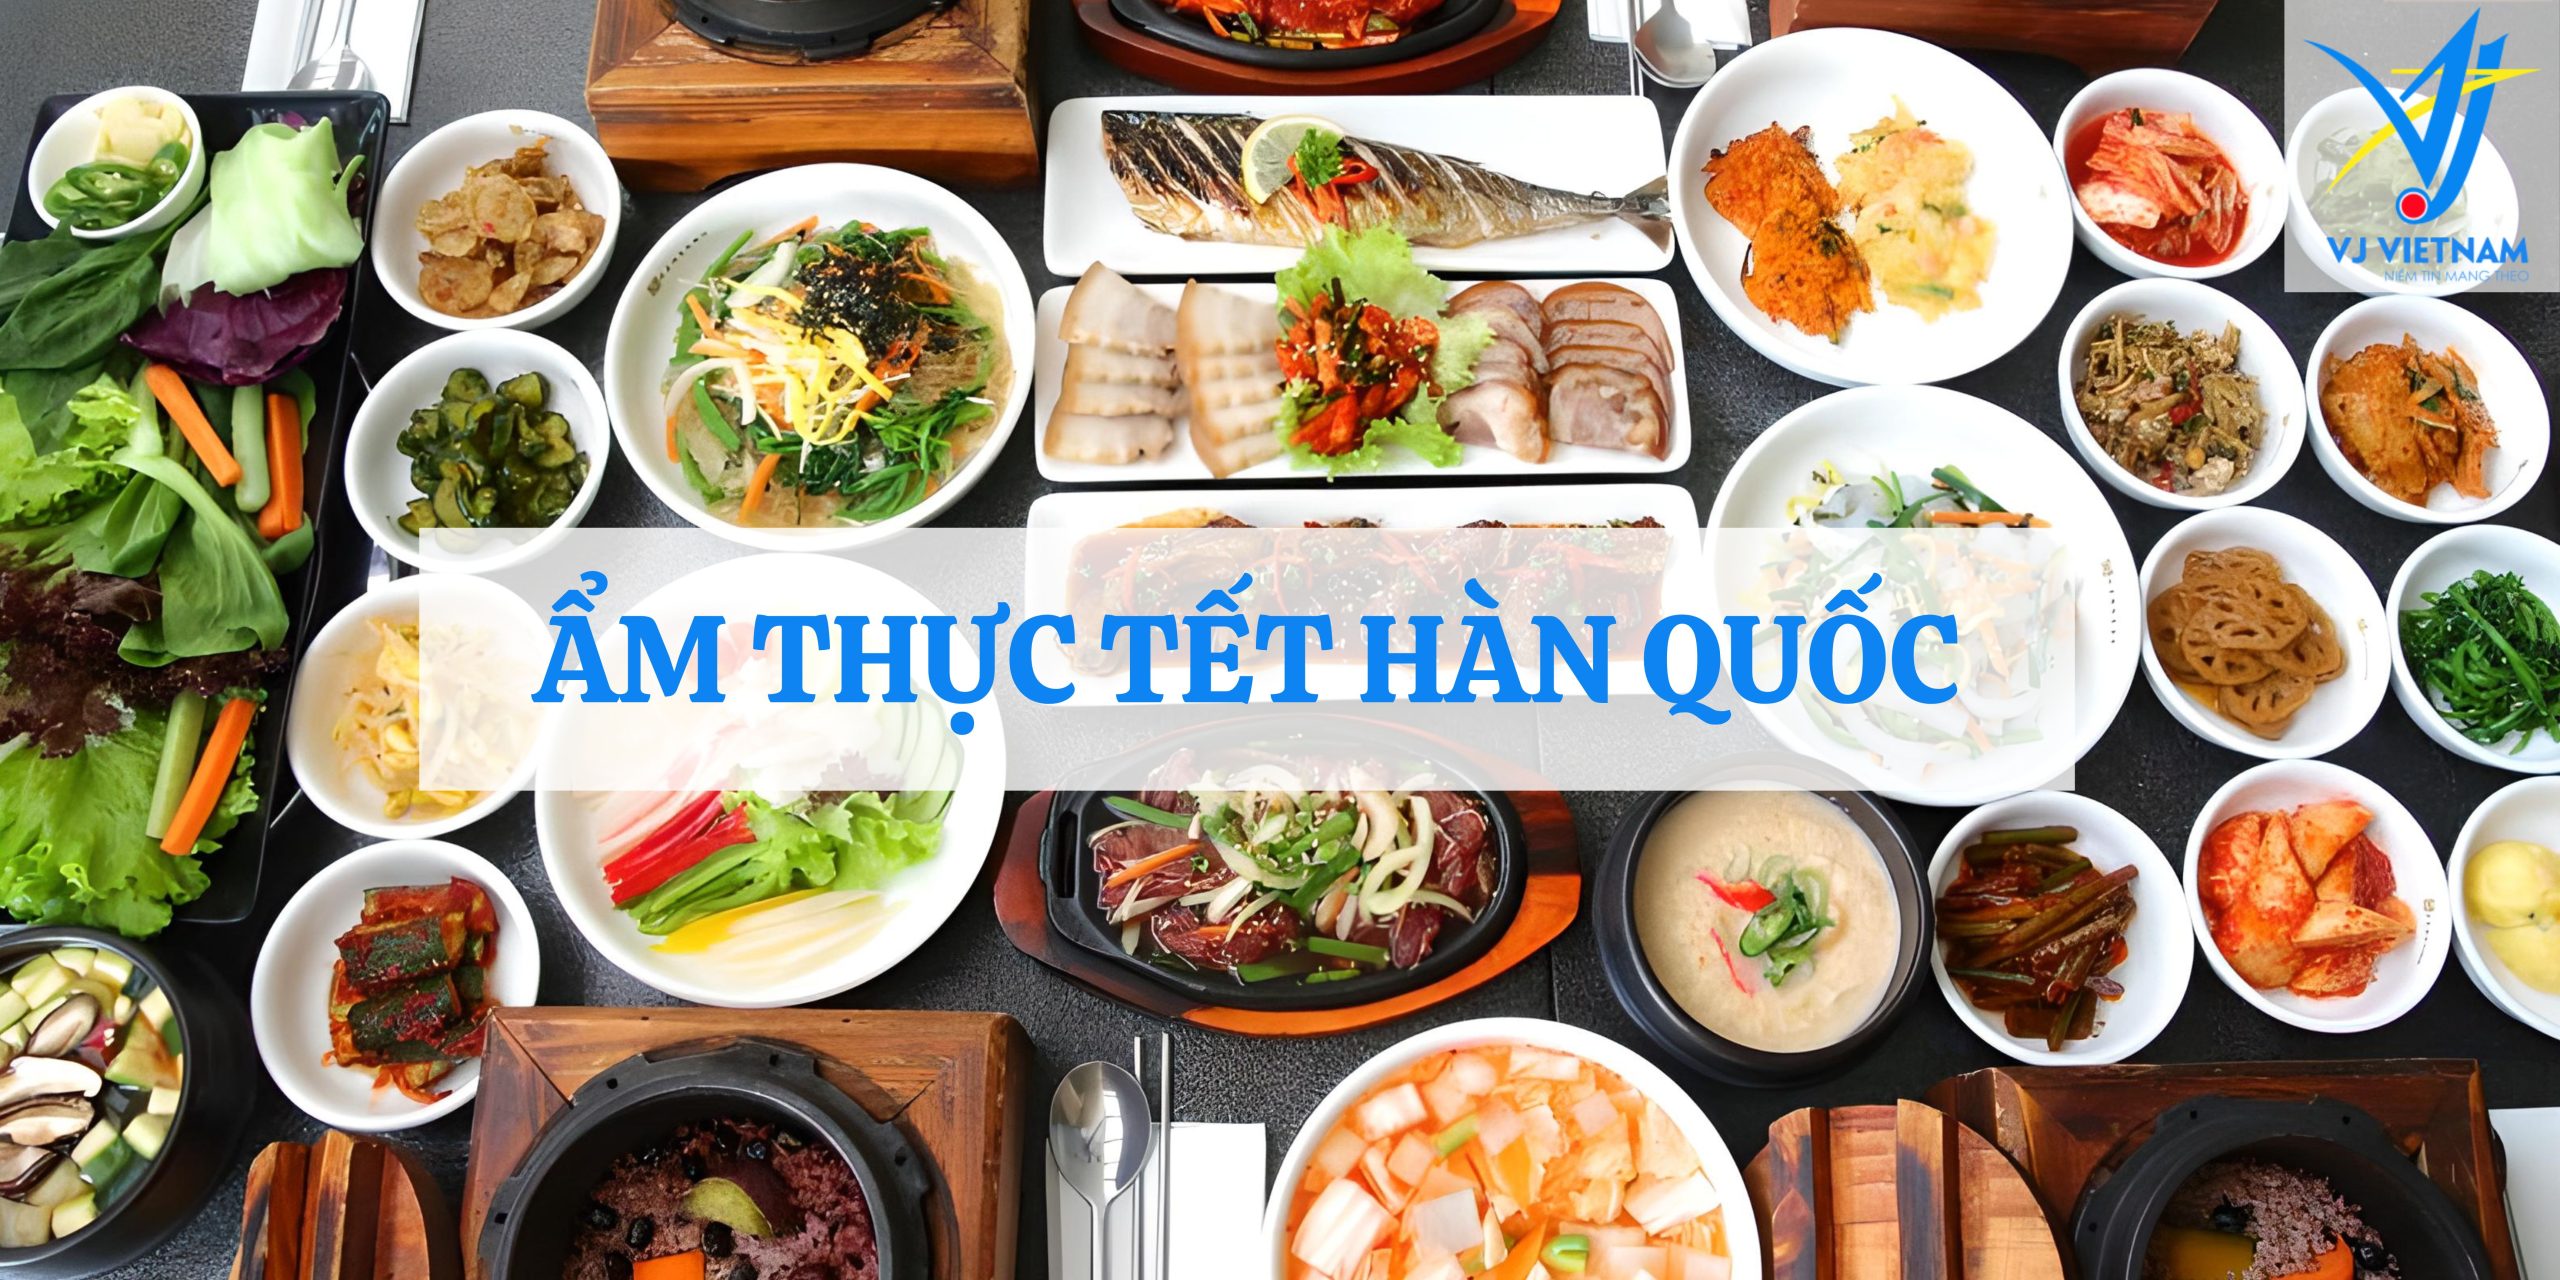 Am thuc Han Quoc.1 scaled